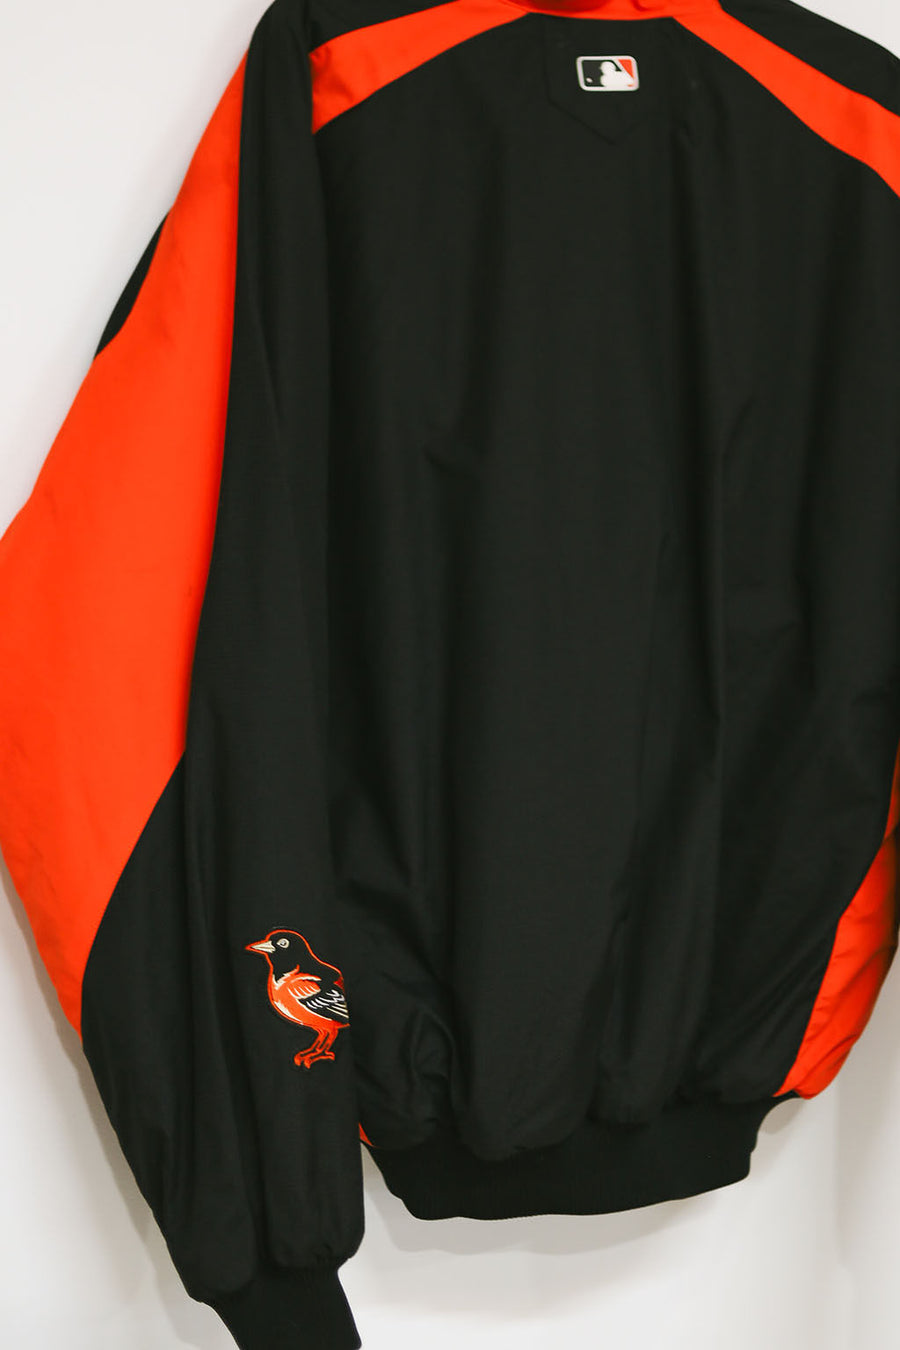 Orioles Jacket by Luna B Vintage